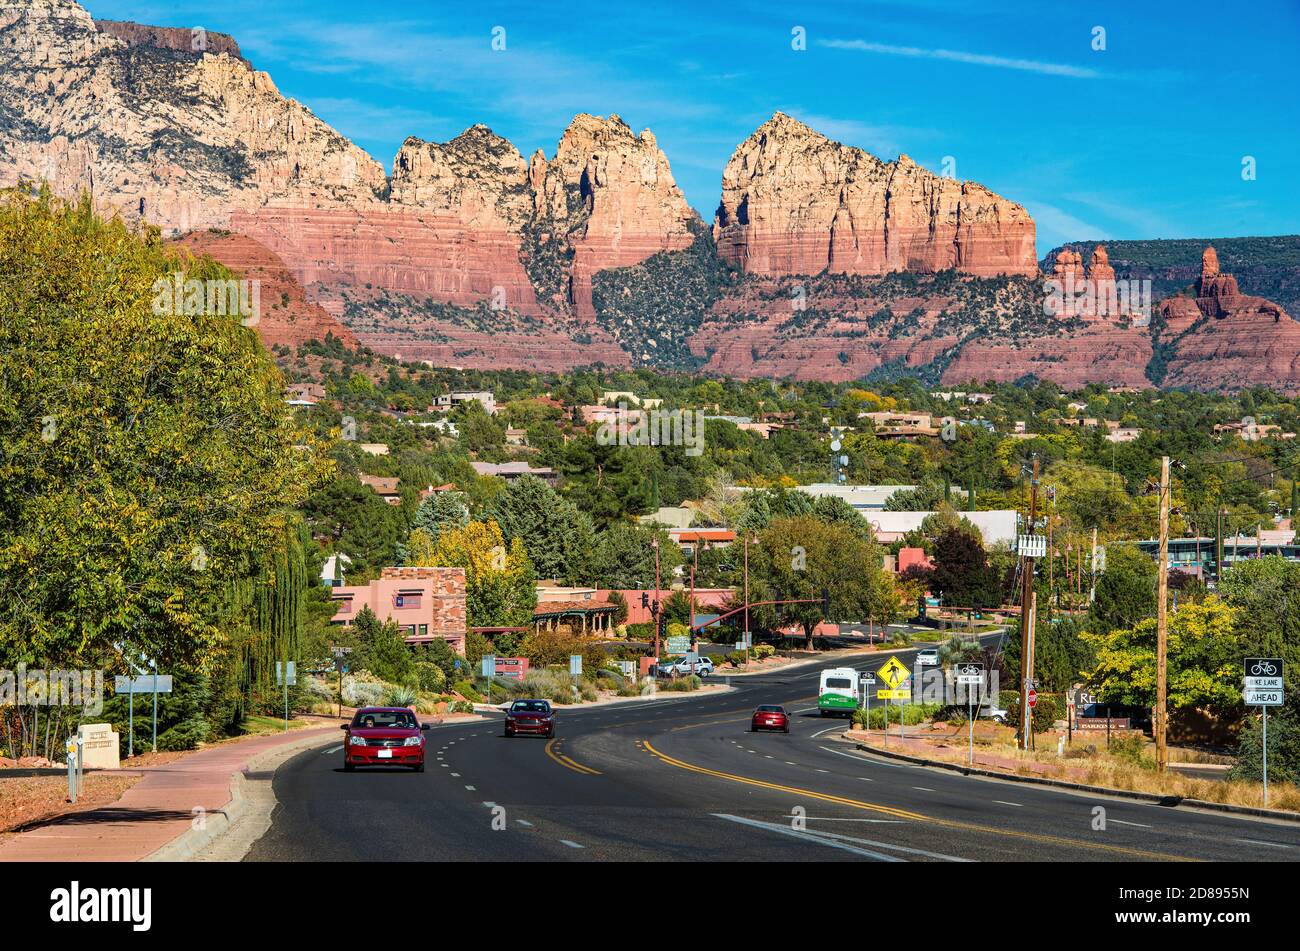 USA, Arizona, Sedona. The historic city Sedona is dominated by colorful sandstone rocks Stock Photo